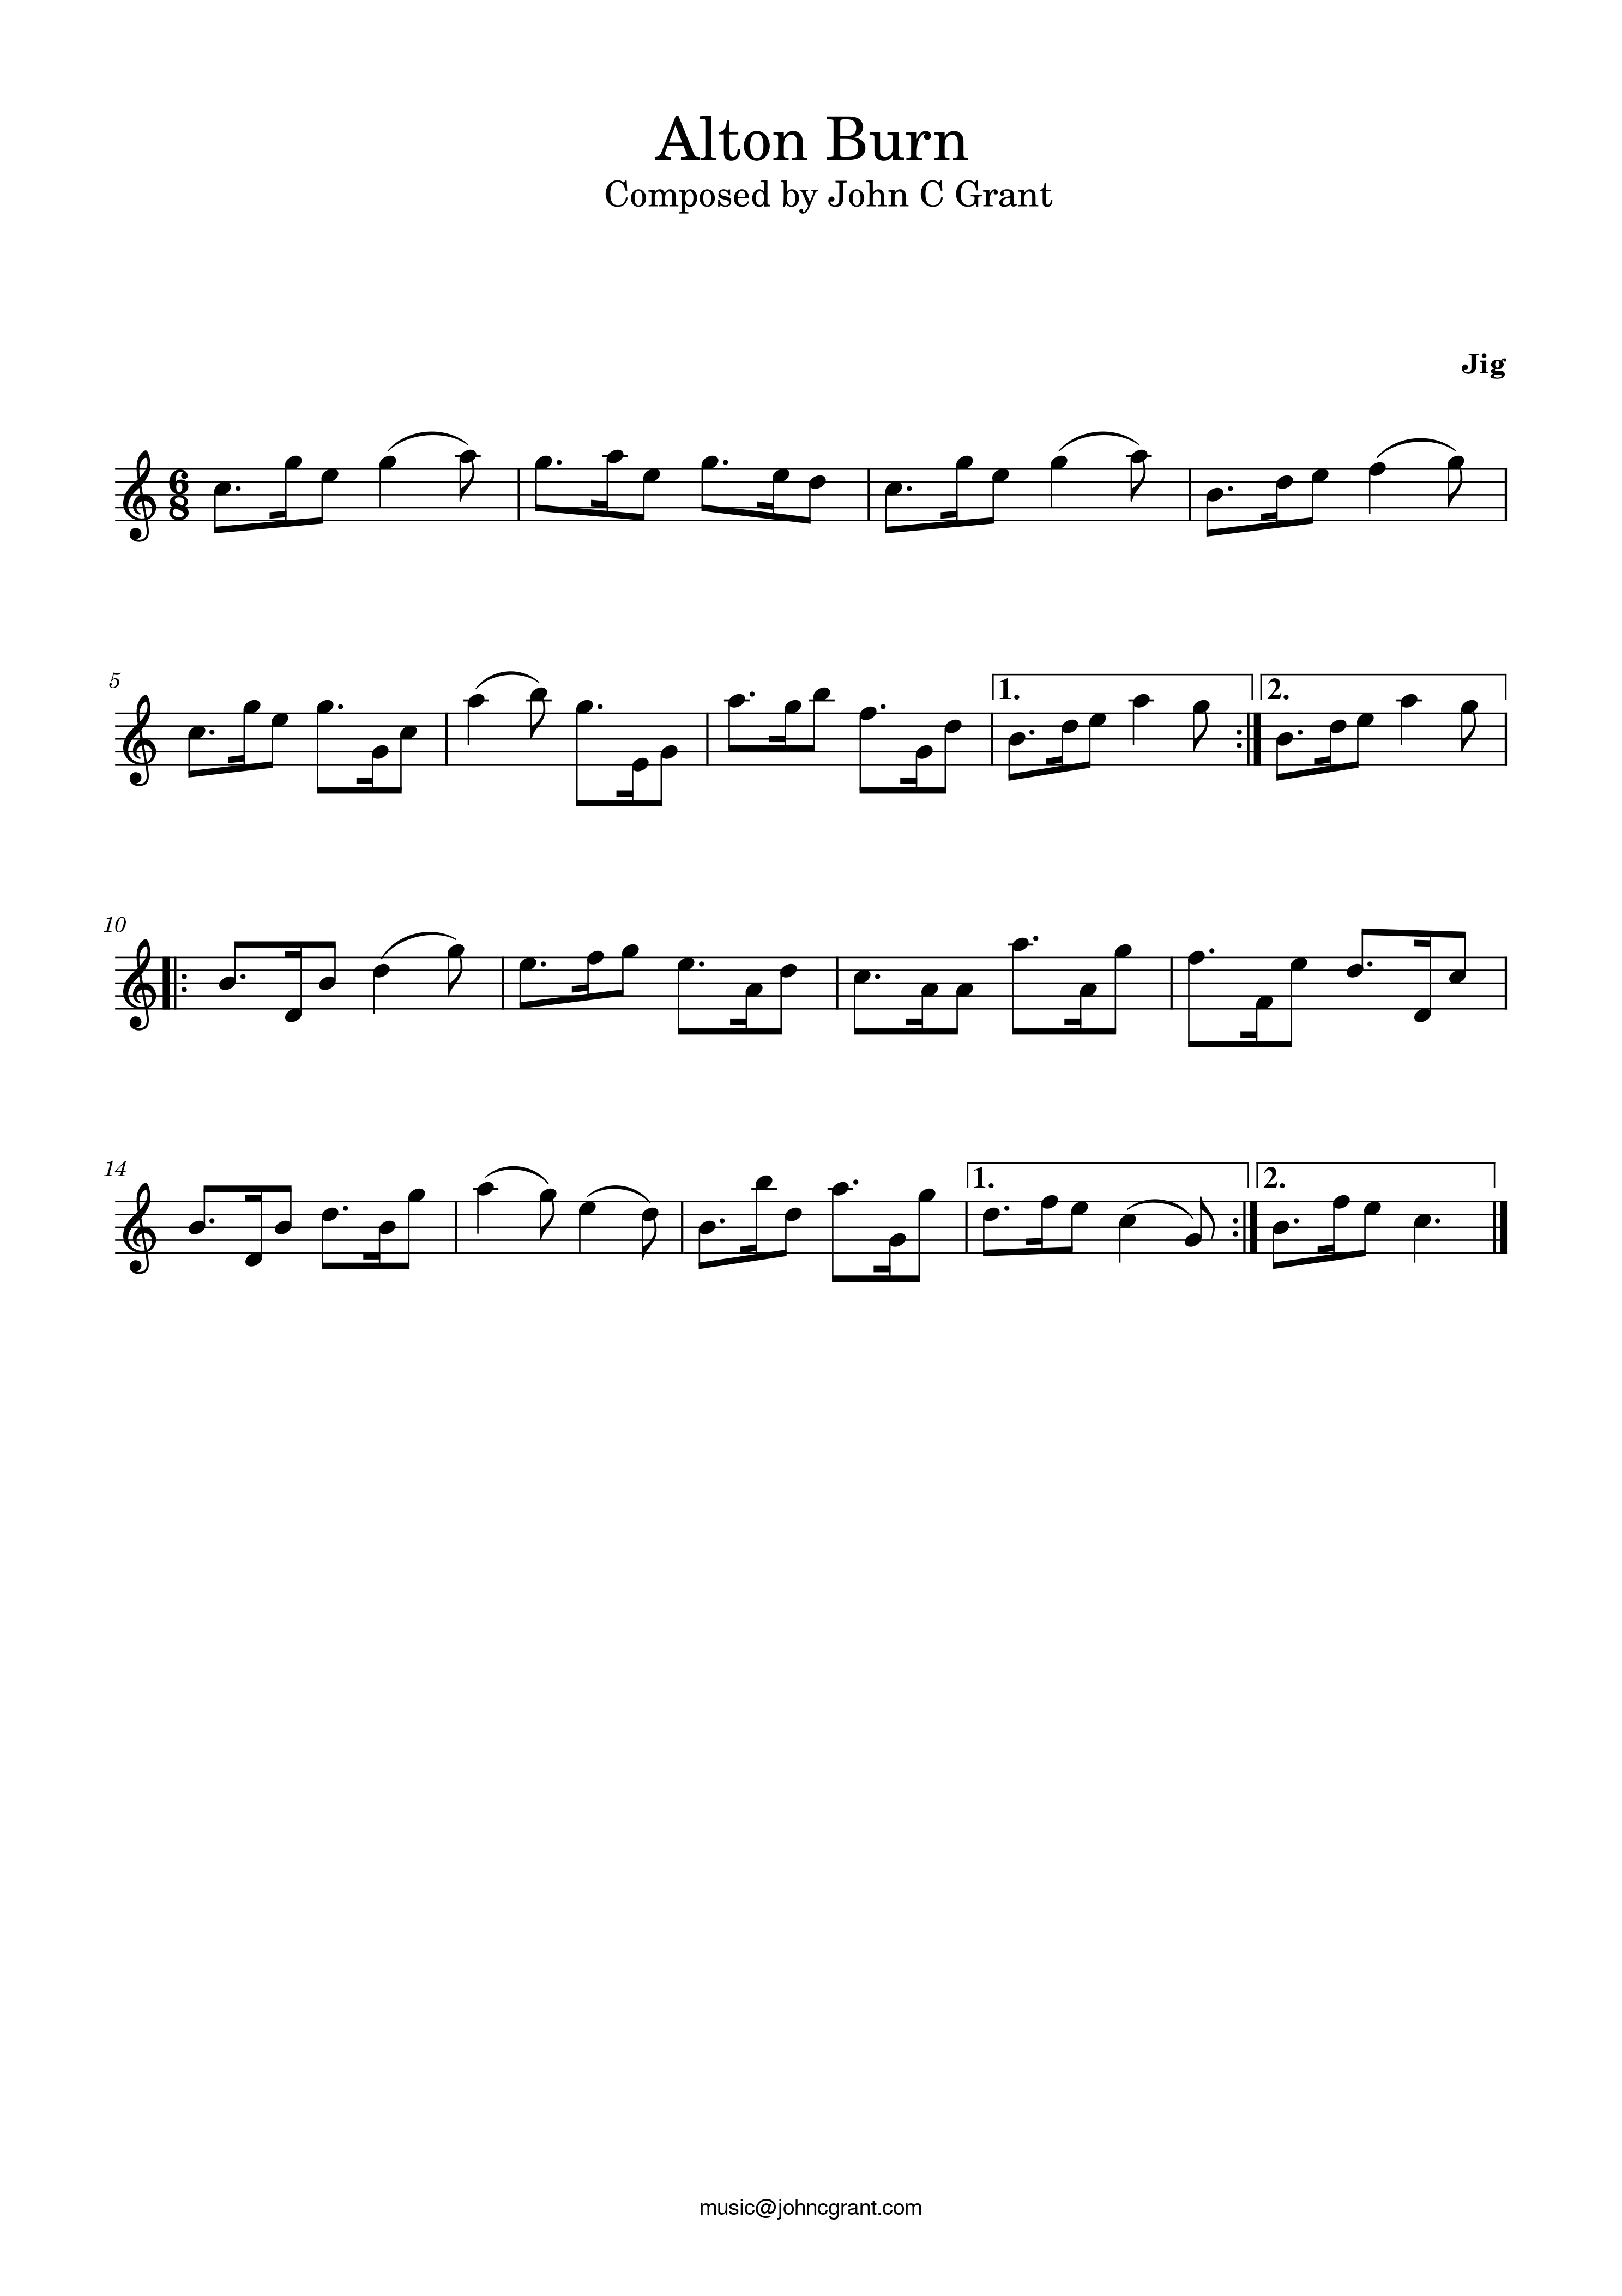 Alton Burn - Composed by John C Grant (https://johncgrant.com). Traditional composer from Kilmarnock, Ayrshire, Scotland.